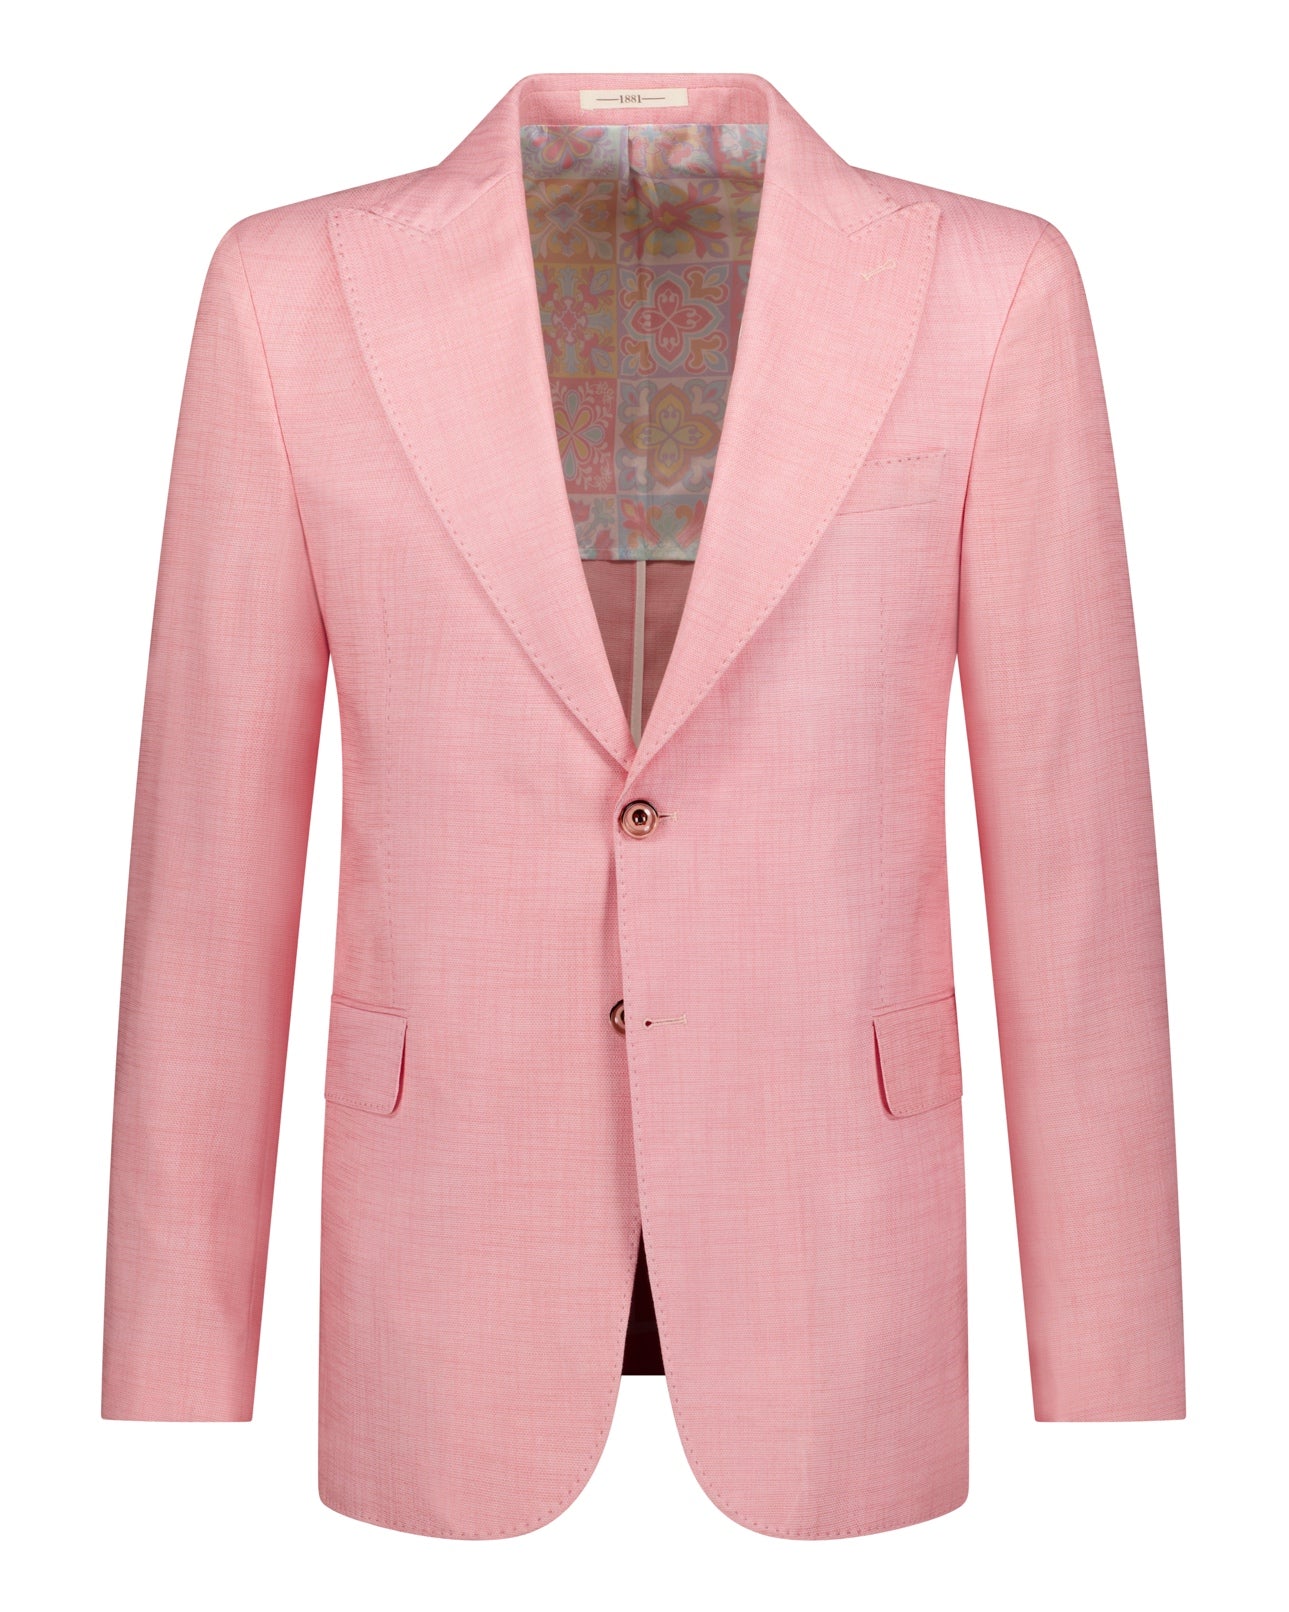 Rockefeller Sport Jacket - Salmon Pink